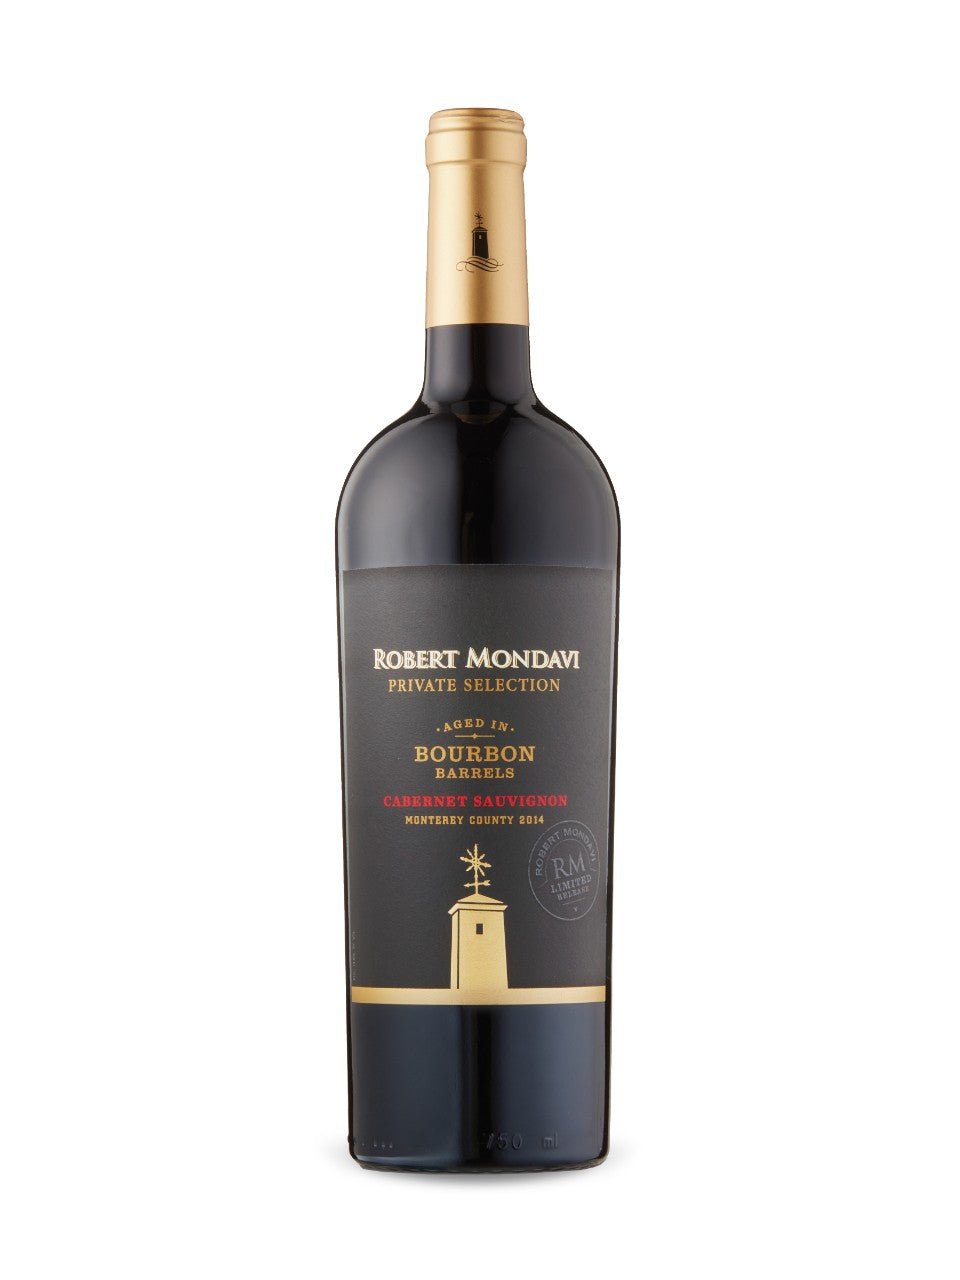 Robert Mondavi Private Selection Bourbon Barrel Cabernet Sauvignon | Exquisite Wine & Alcohol Gift Delivery Toronto Canada